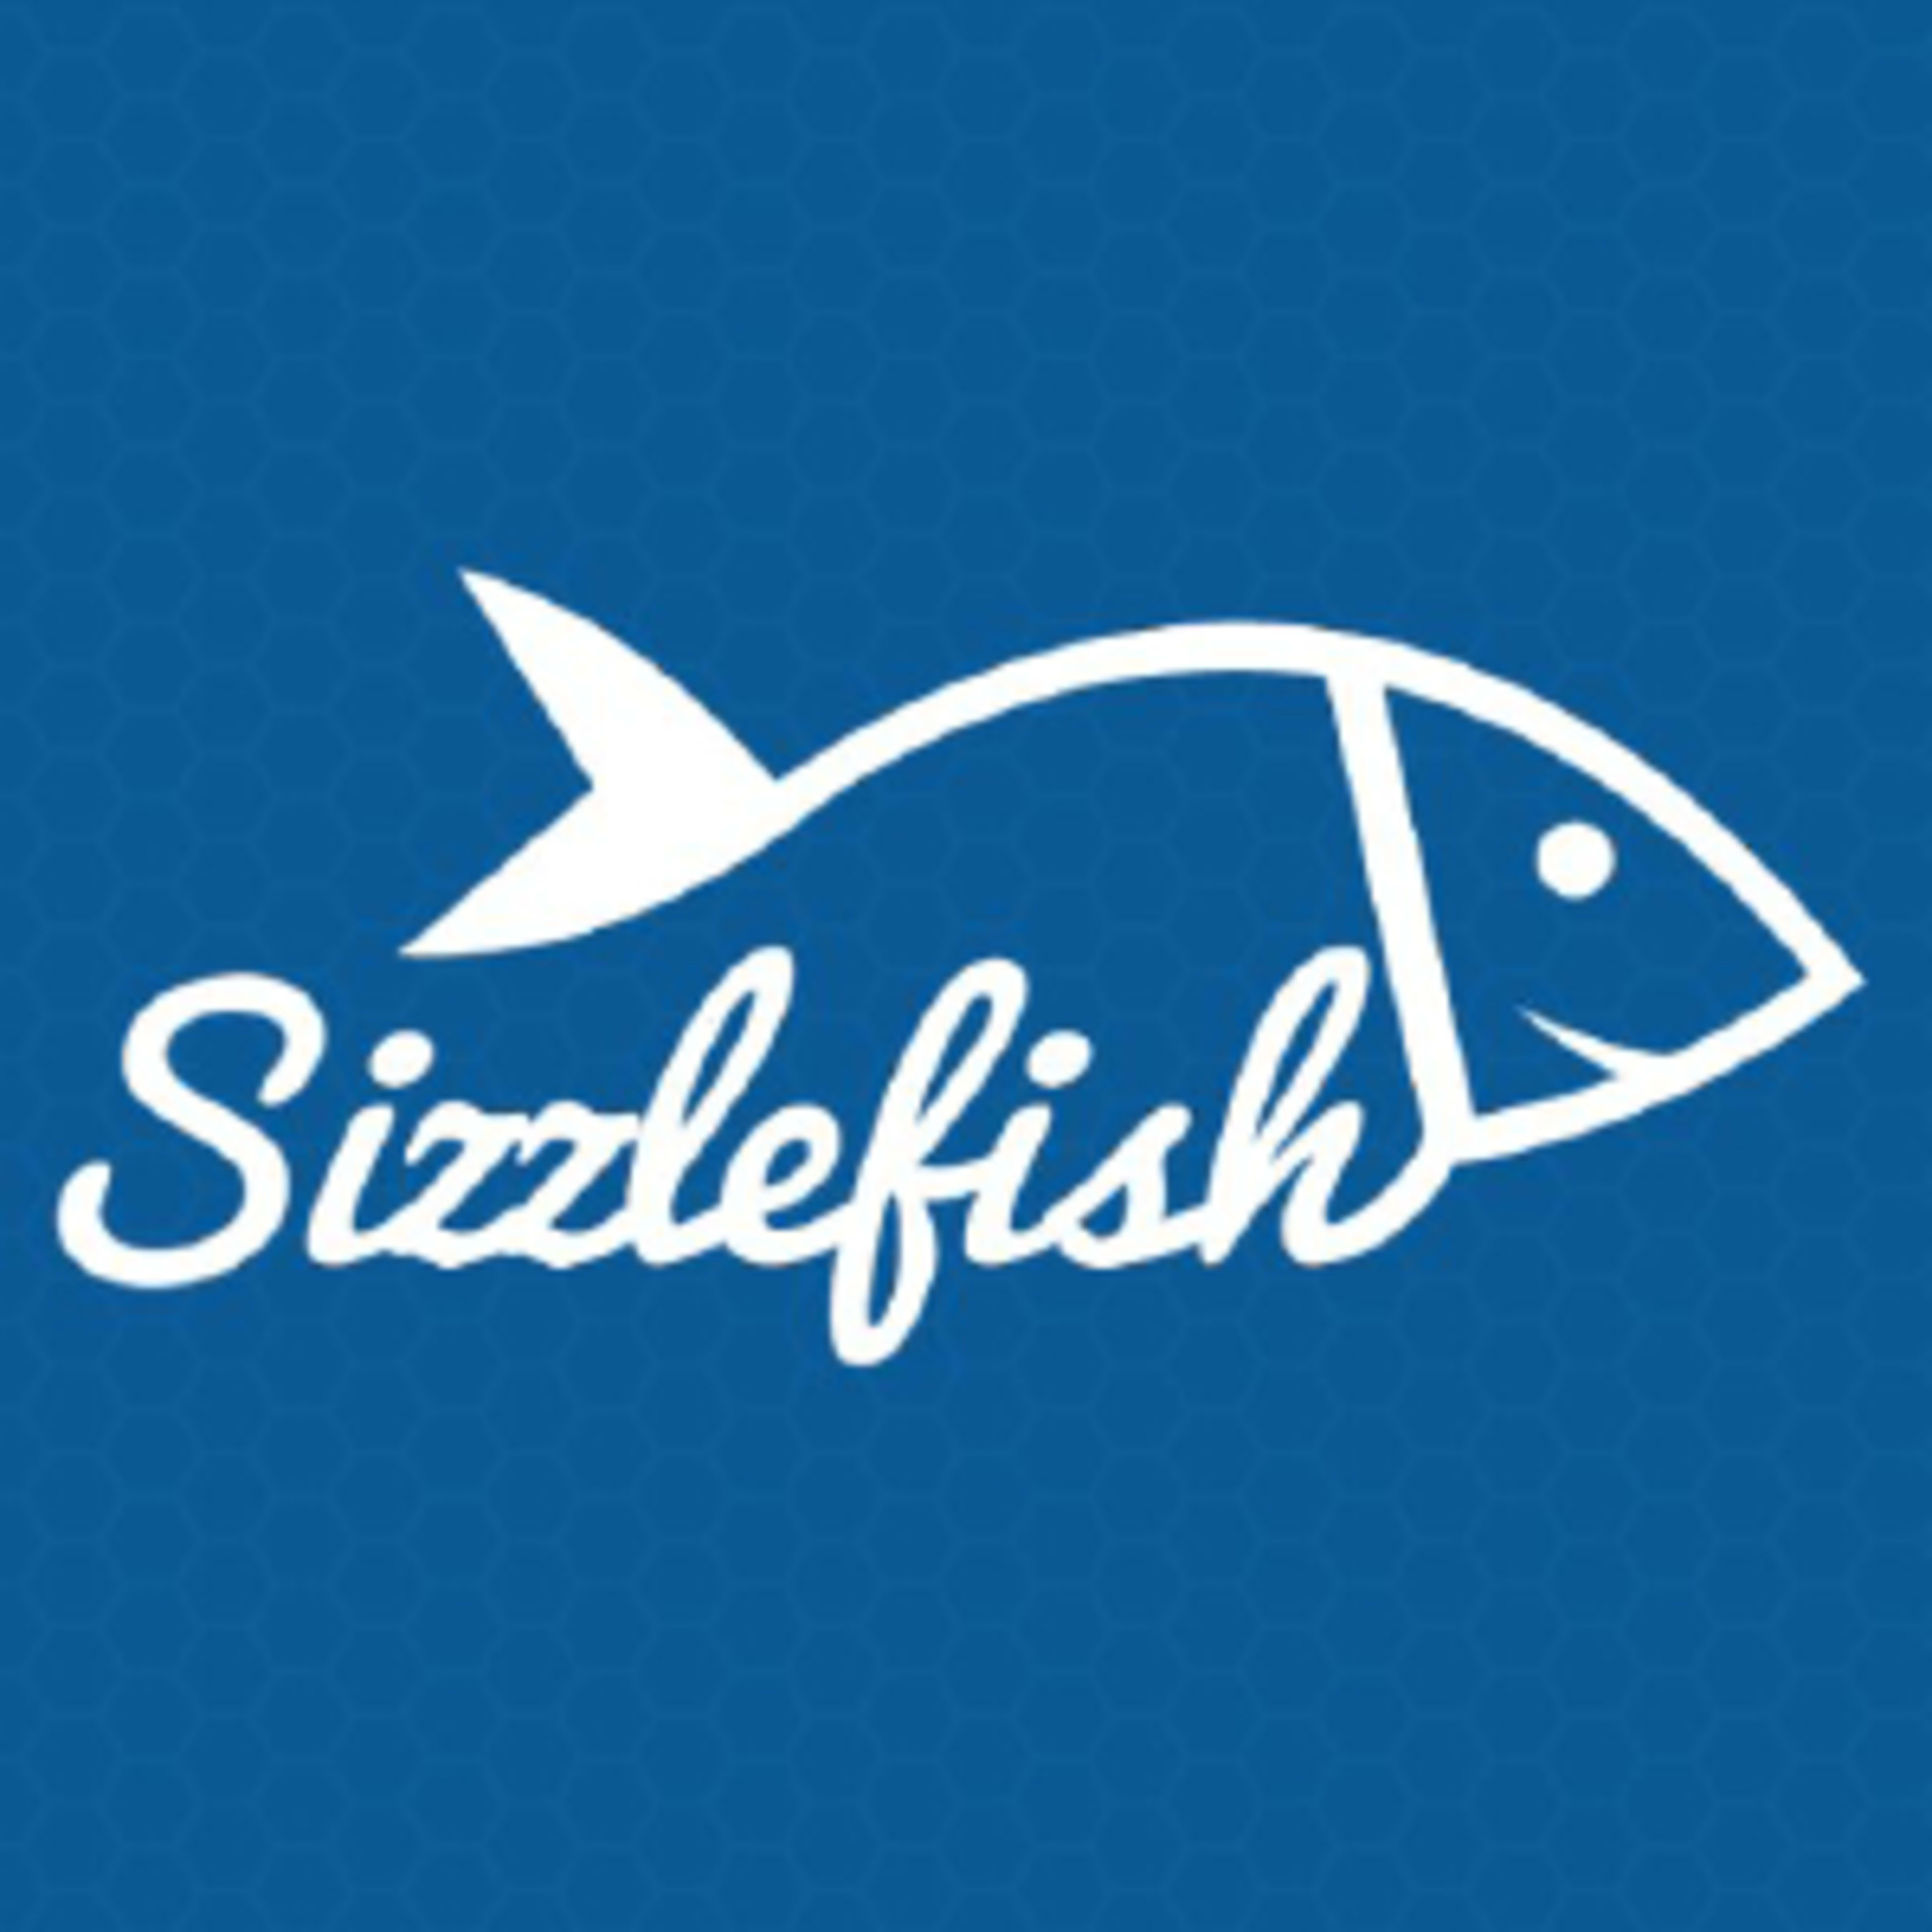 Sizzlefish Code